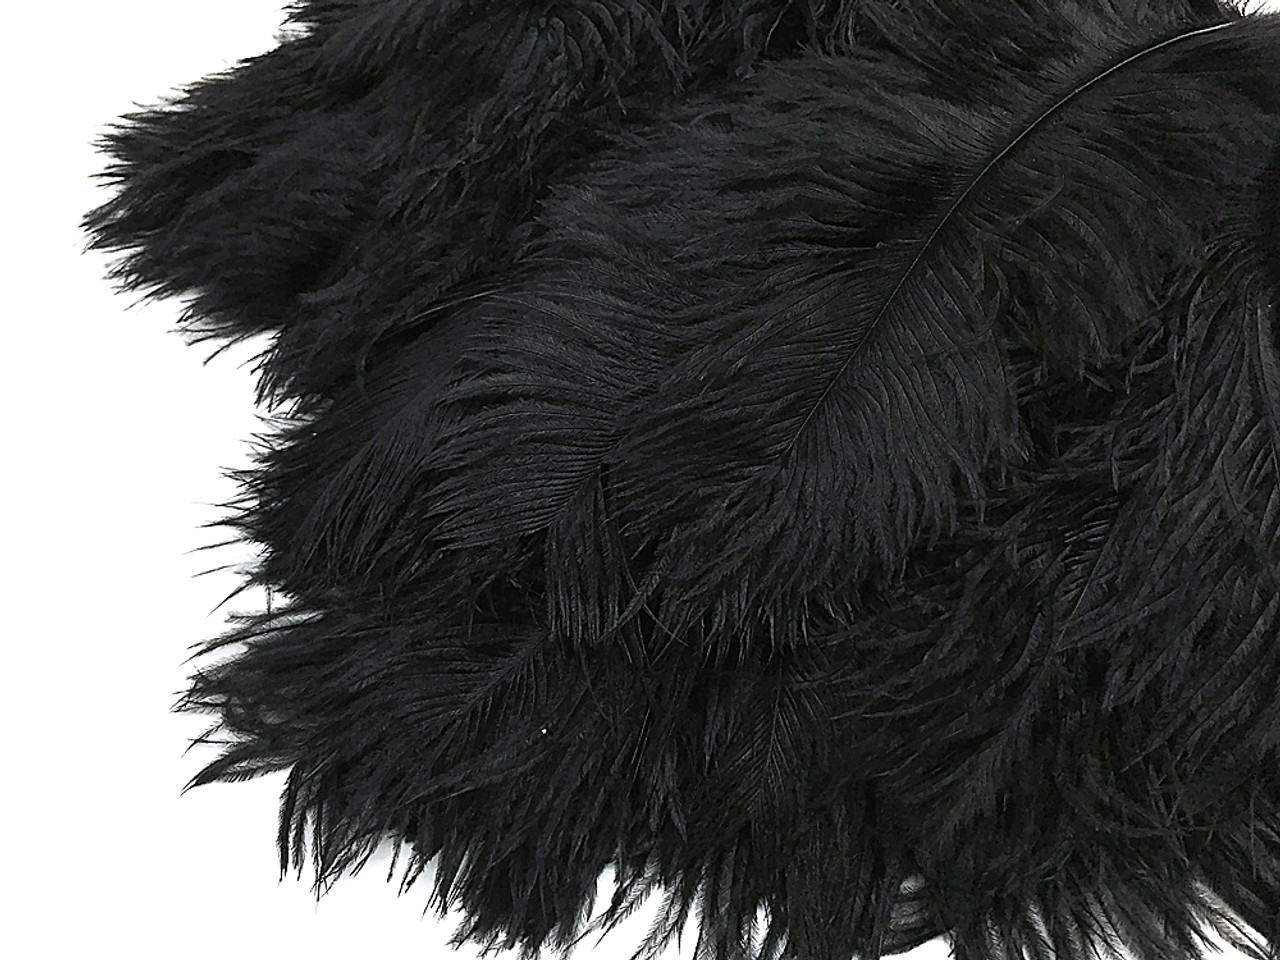 Ostrich Feather Trim Black